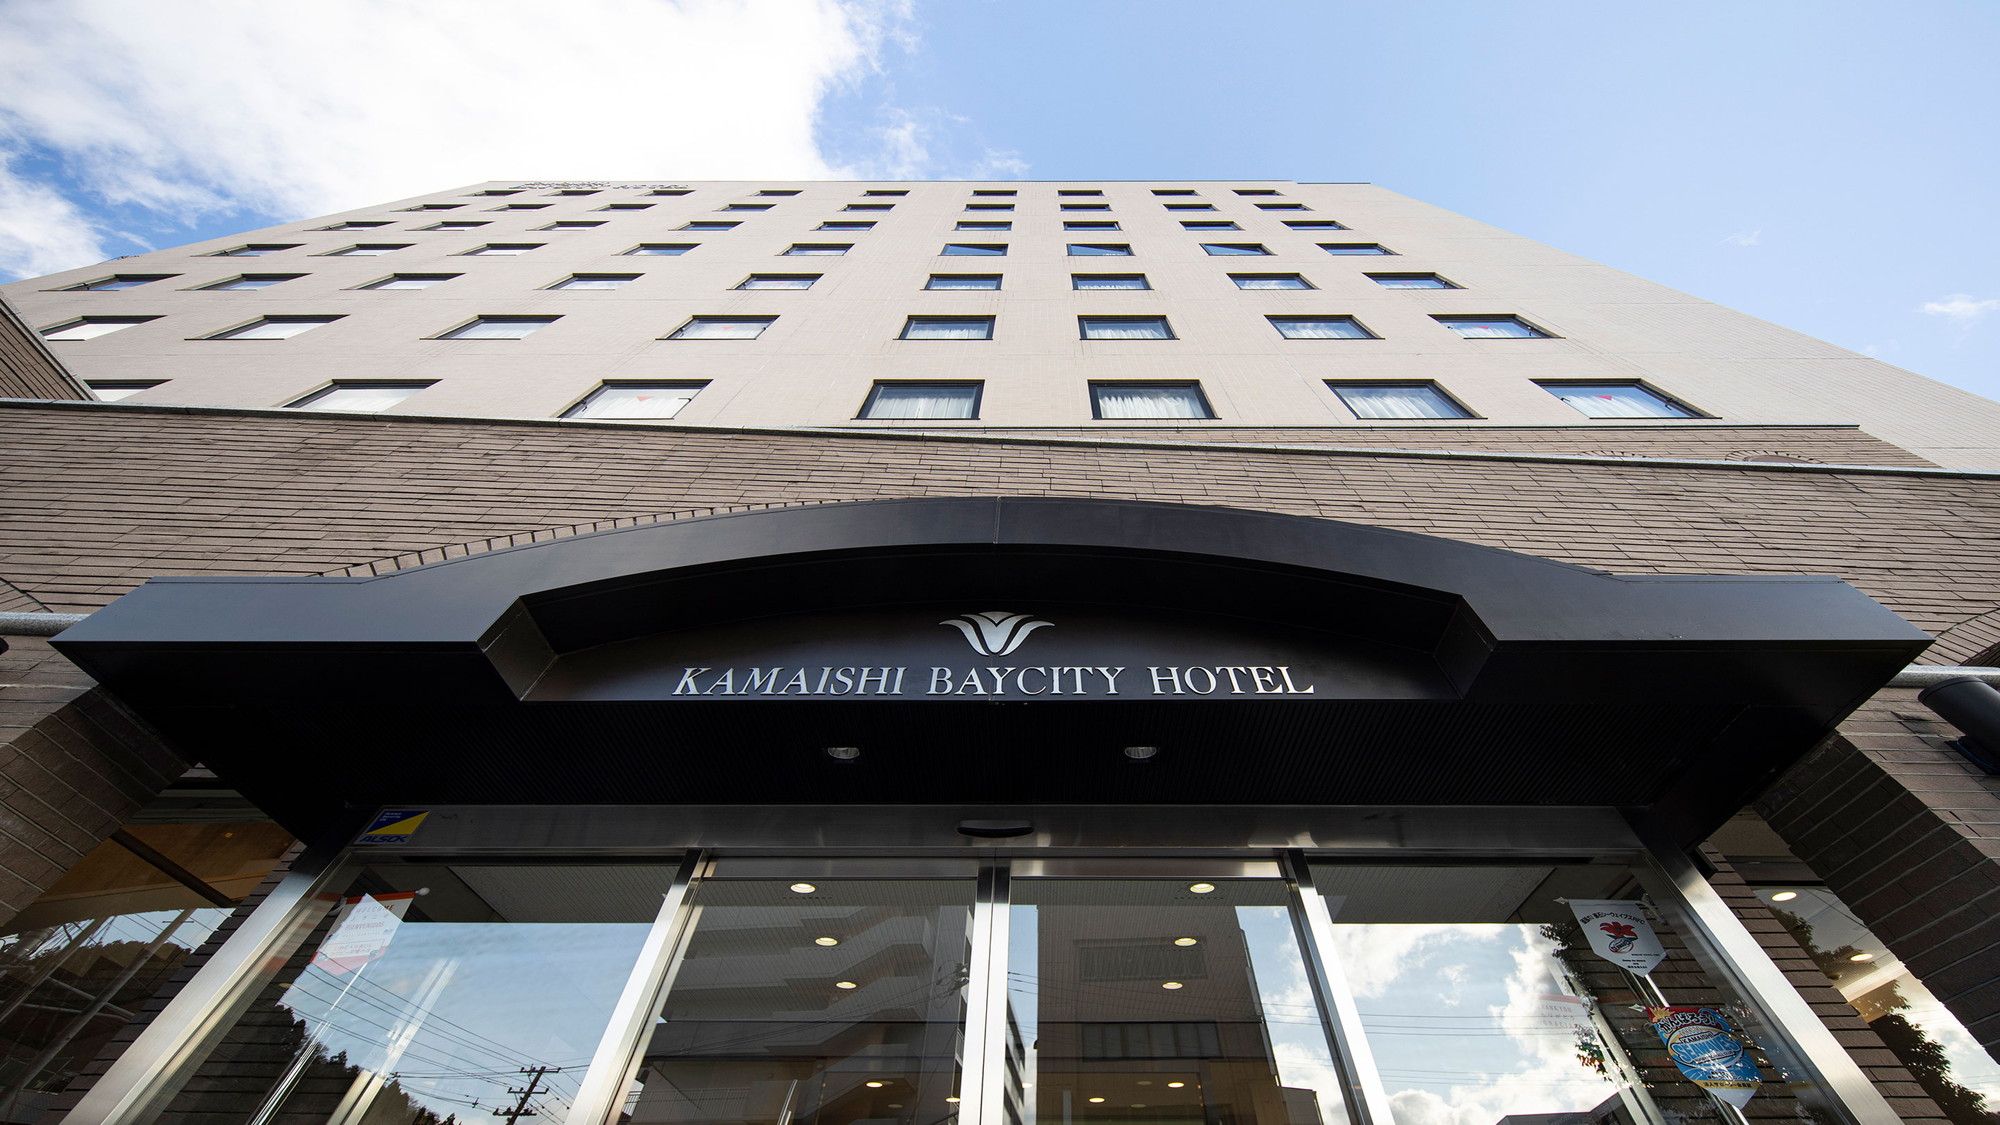 Kamaishi Bay City Hotel